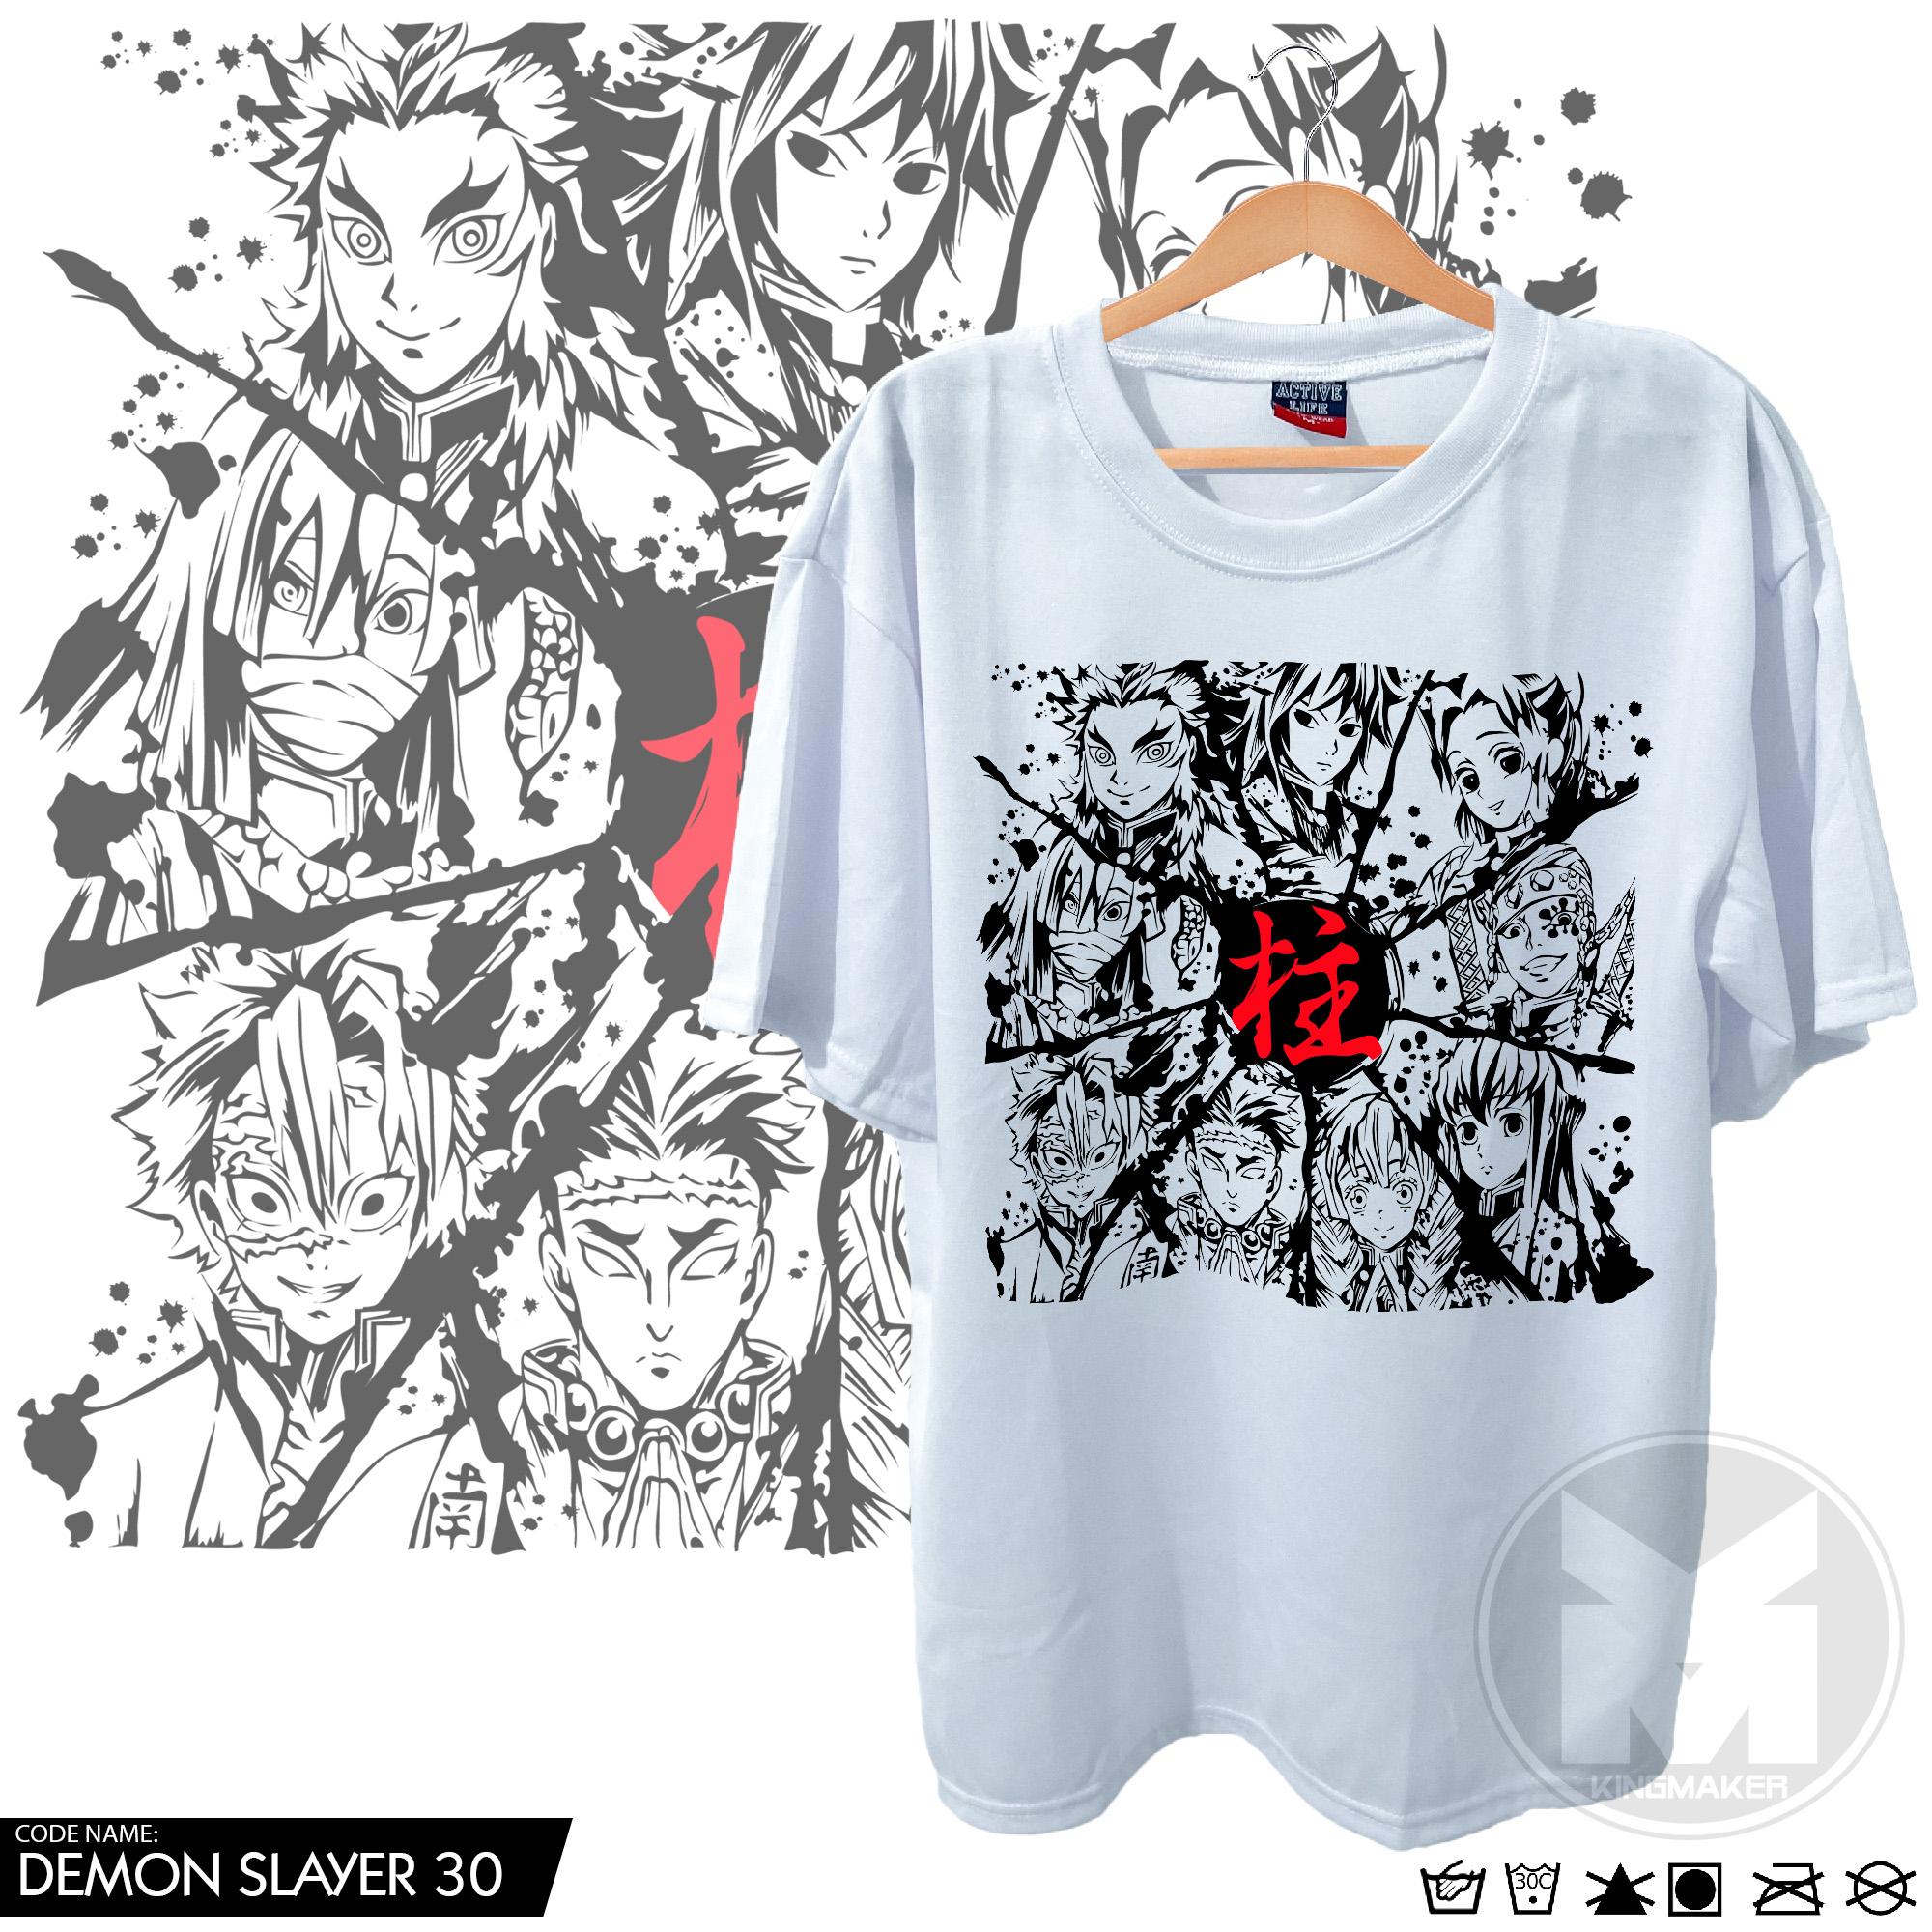 Demon Slayer T-Shirts merch, clothing & apparel - Anime Ape